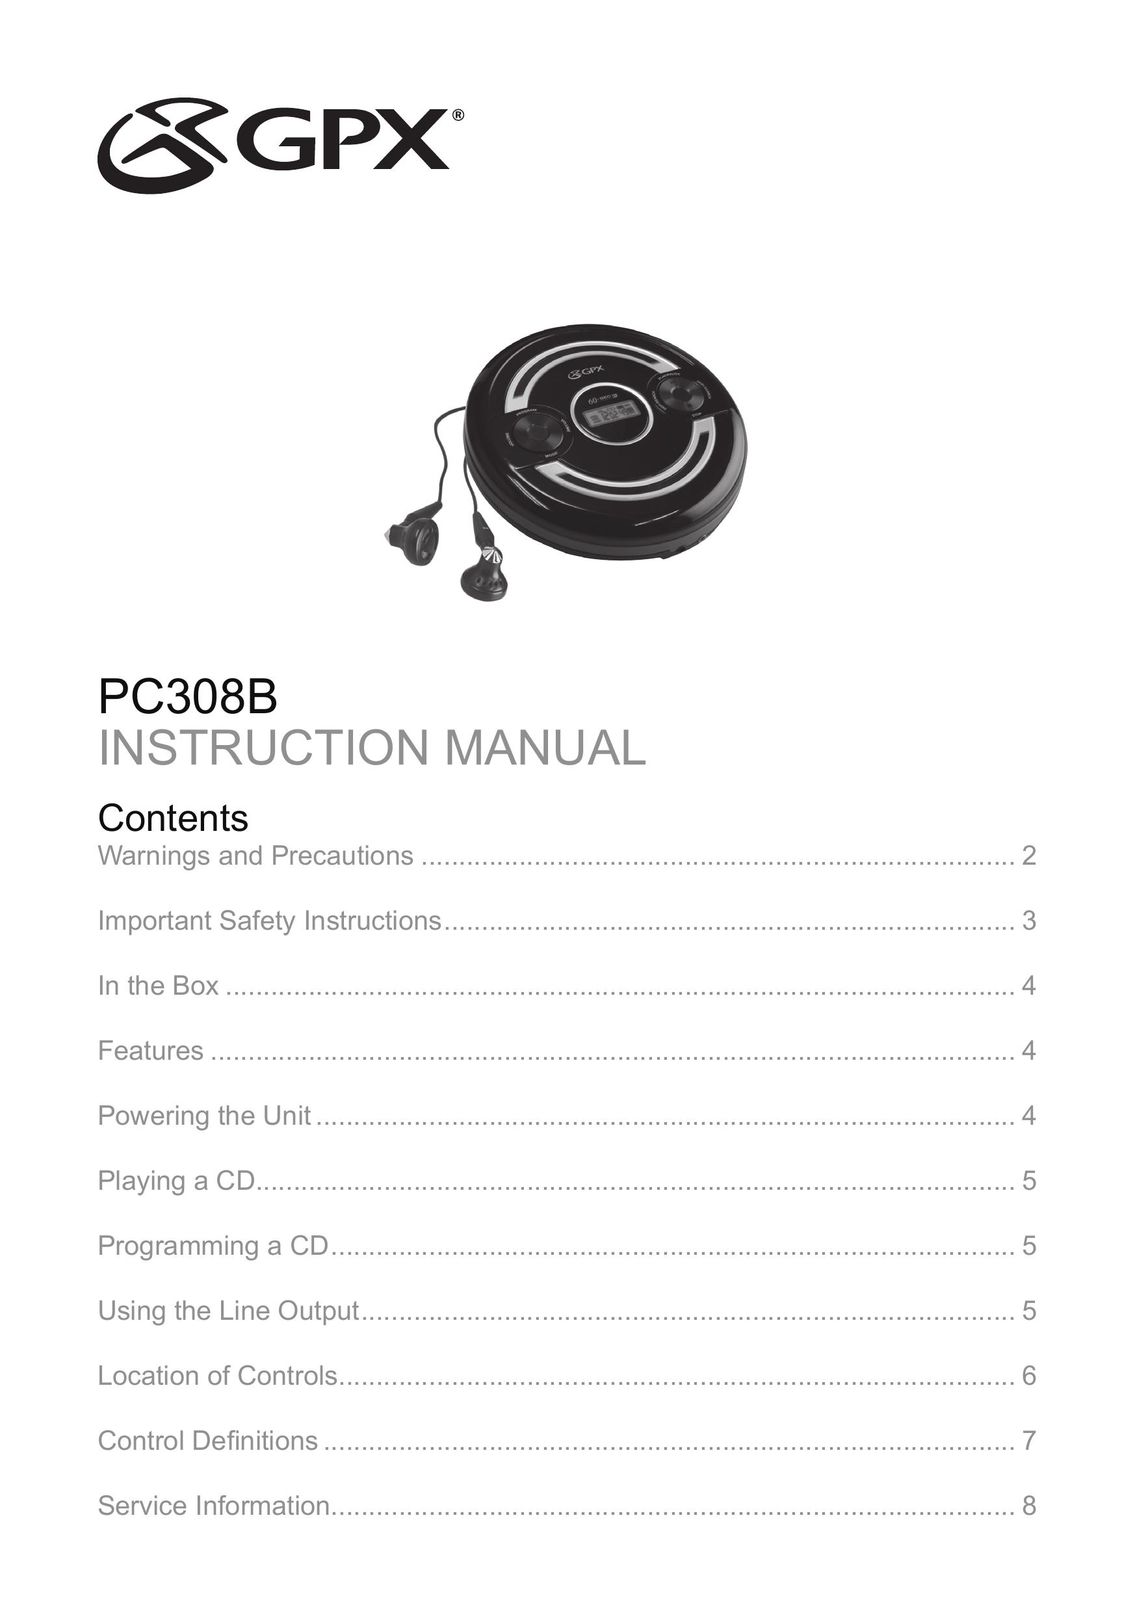 GPX PC308B CD Player User Manual